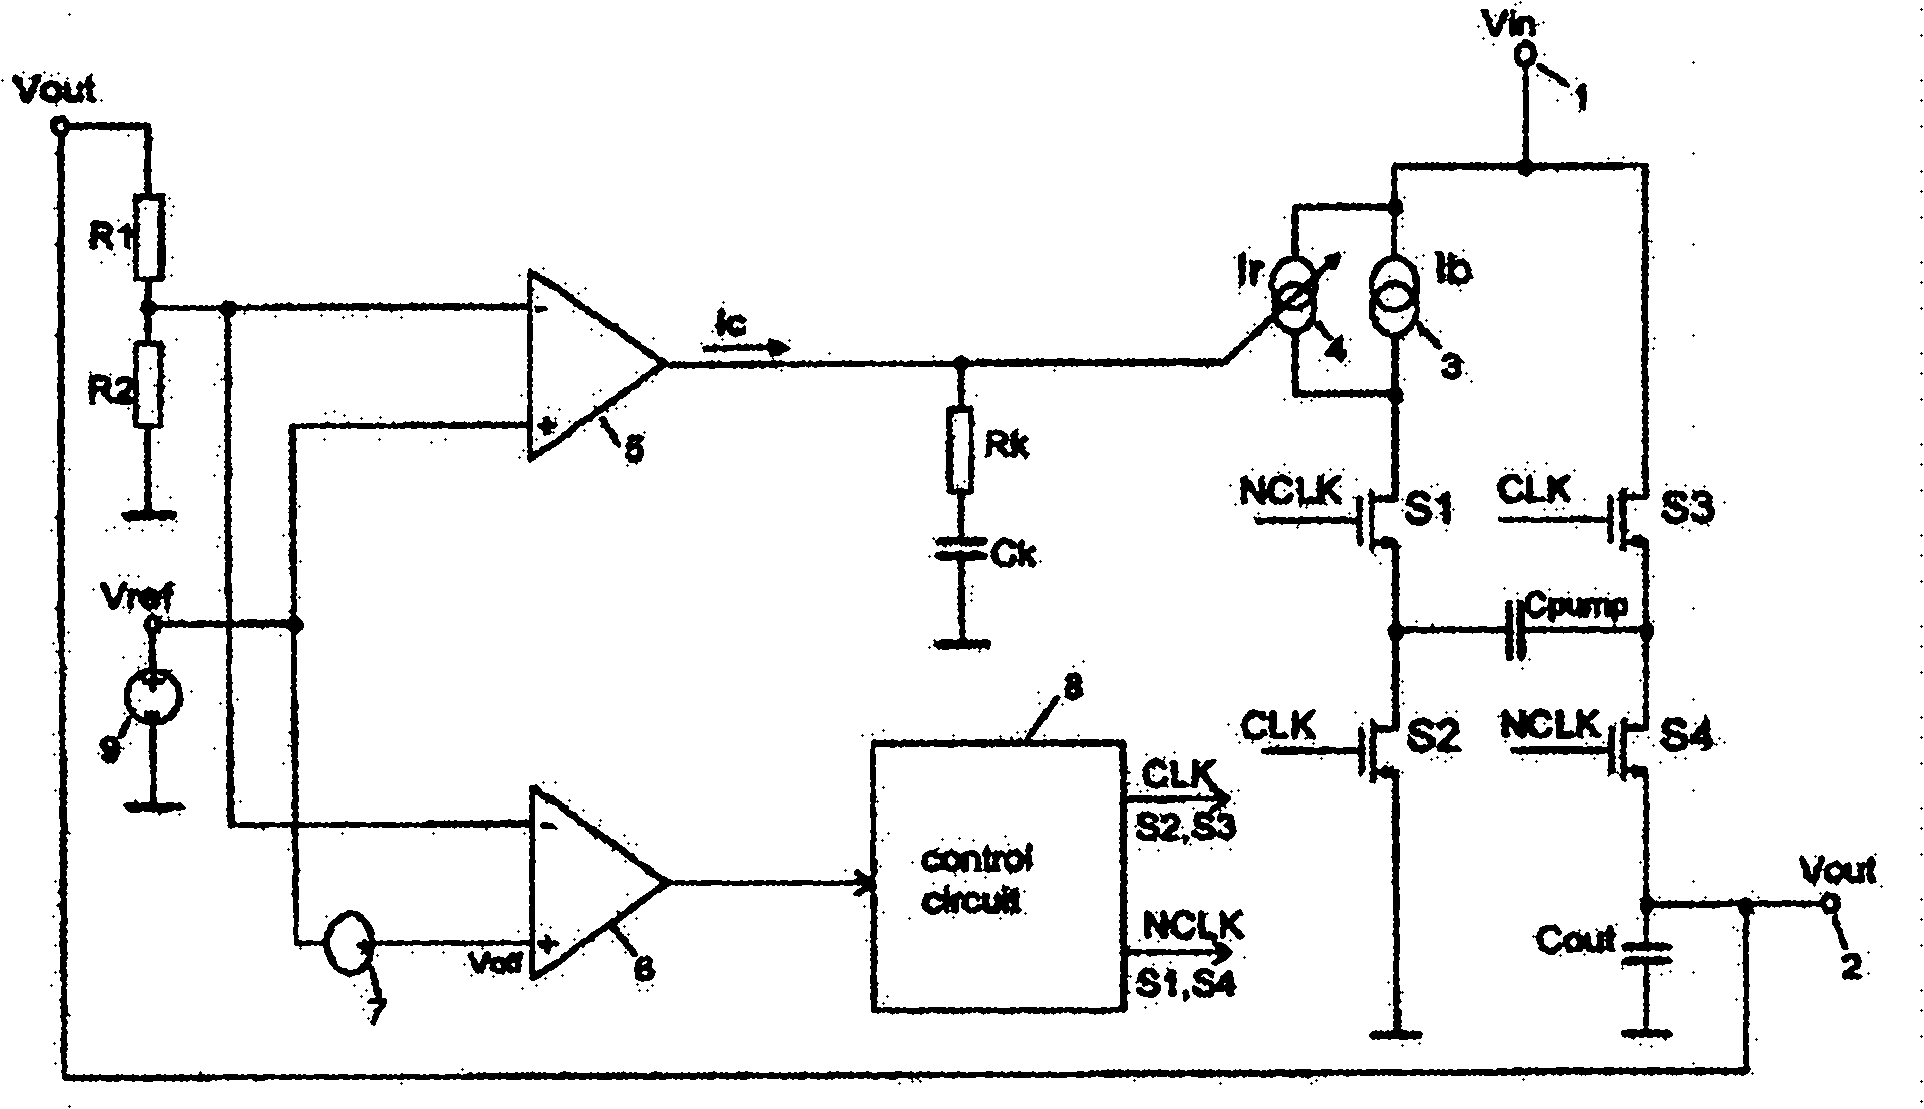 Constant voltage output charge pump circuit